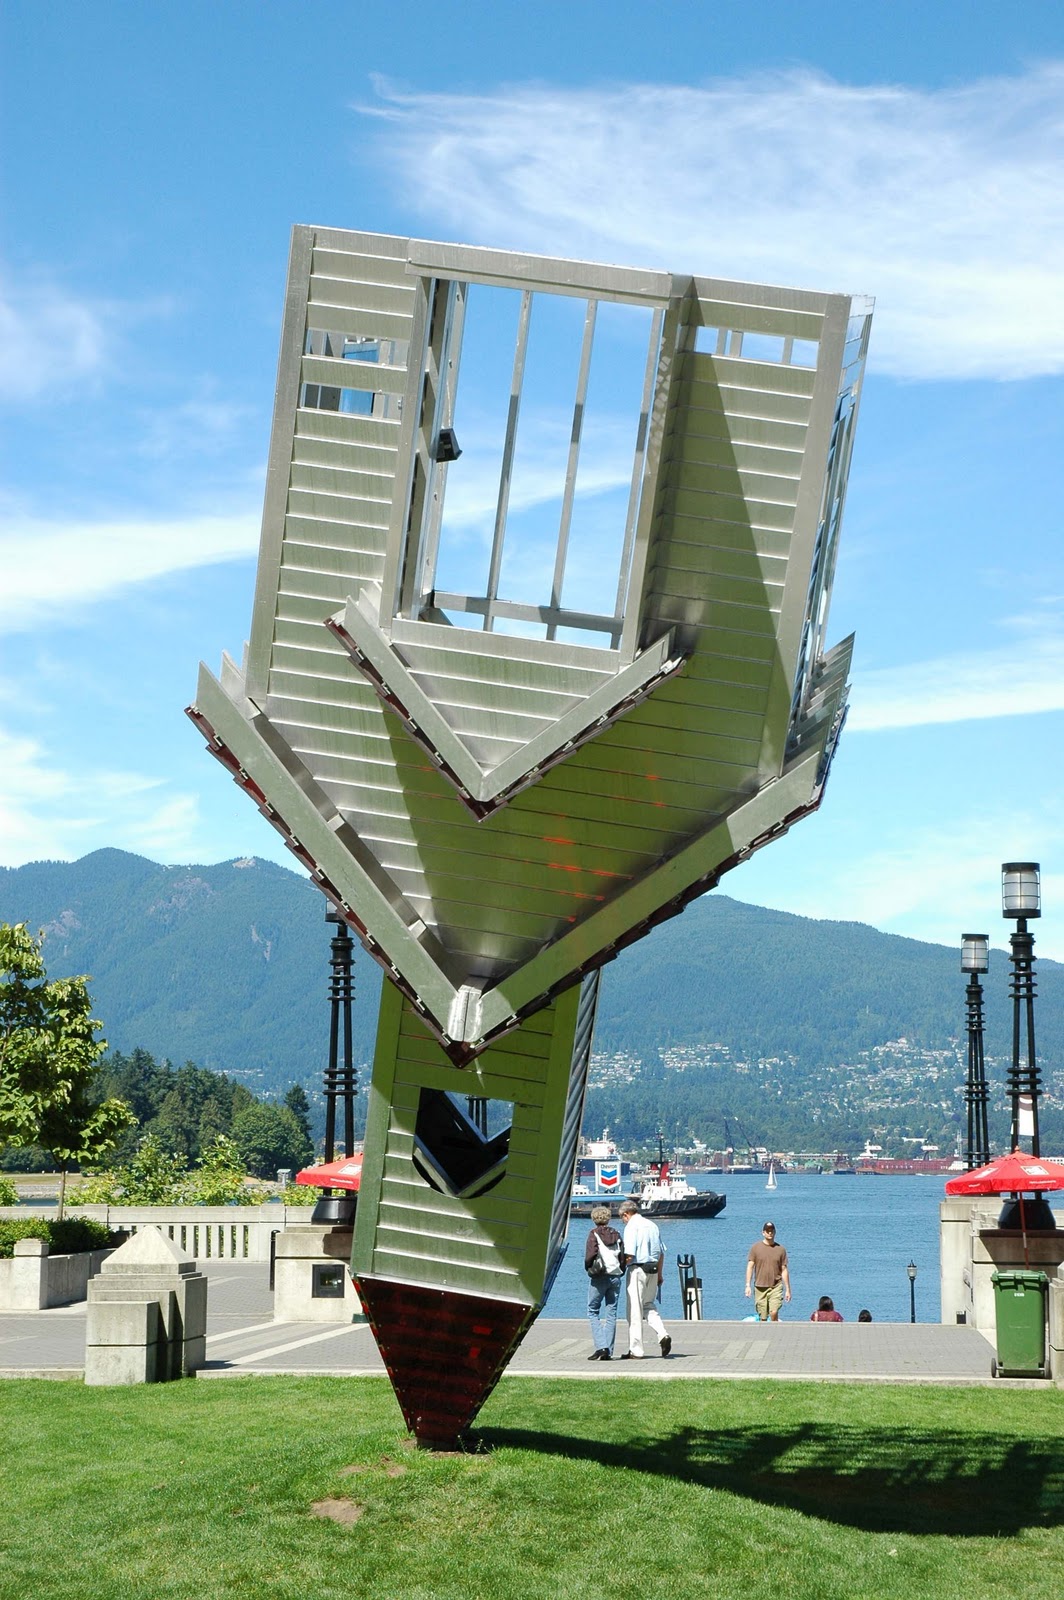 https://blogger.googleusercontent.com/img/b/R29vZ2xl/AVvXsEiWyLt0Rhgd7QdjGjfeK2uyMtyBvMjdMn_3DzyC5AeE7PytwfkGVPXT1NEwP3HXYvT2G2TAQ1CpYhloYWAKim5lBe072hIrrsl1JCNXvUj4p7k5ONUs5fxJAd9ohp5SLp7x7IzRoUv7J-4/s1600/Evil+Vancouver+Canada.jpg4.jpg